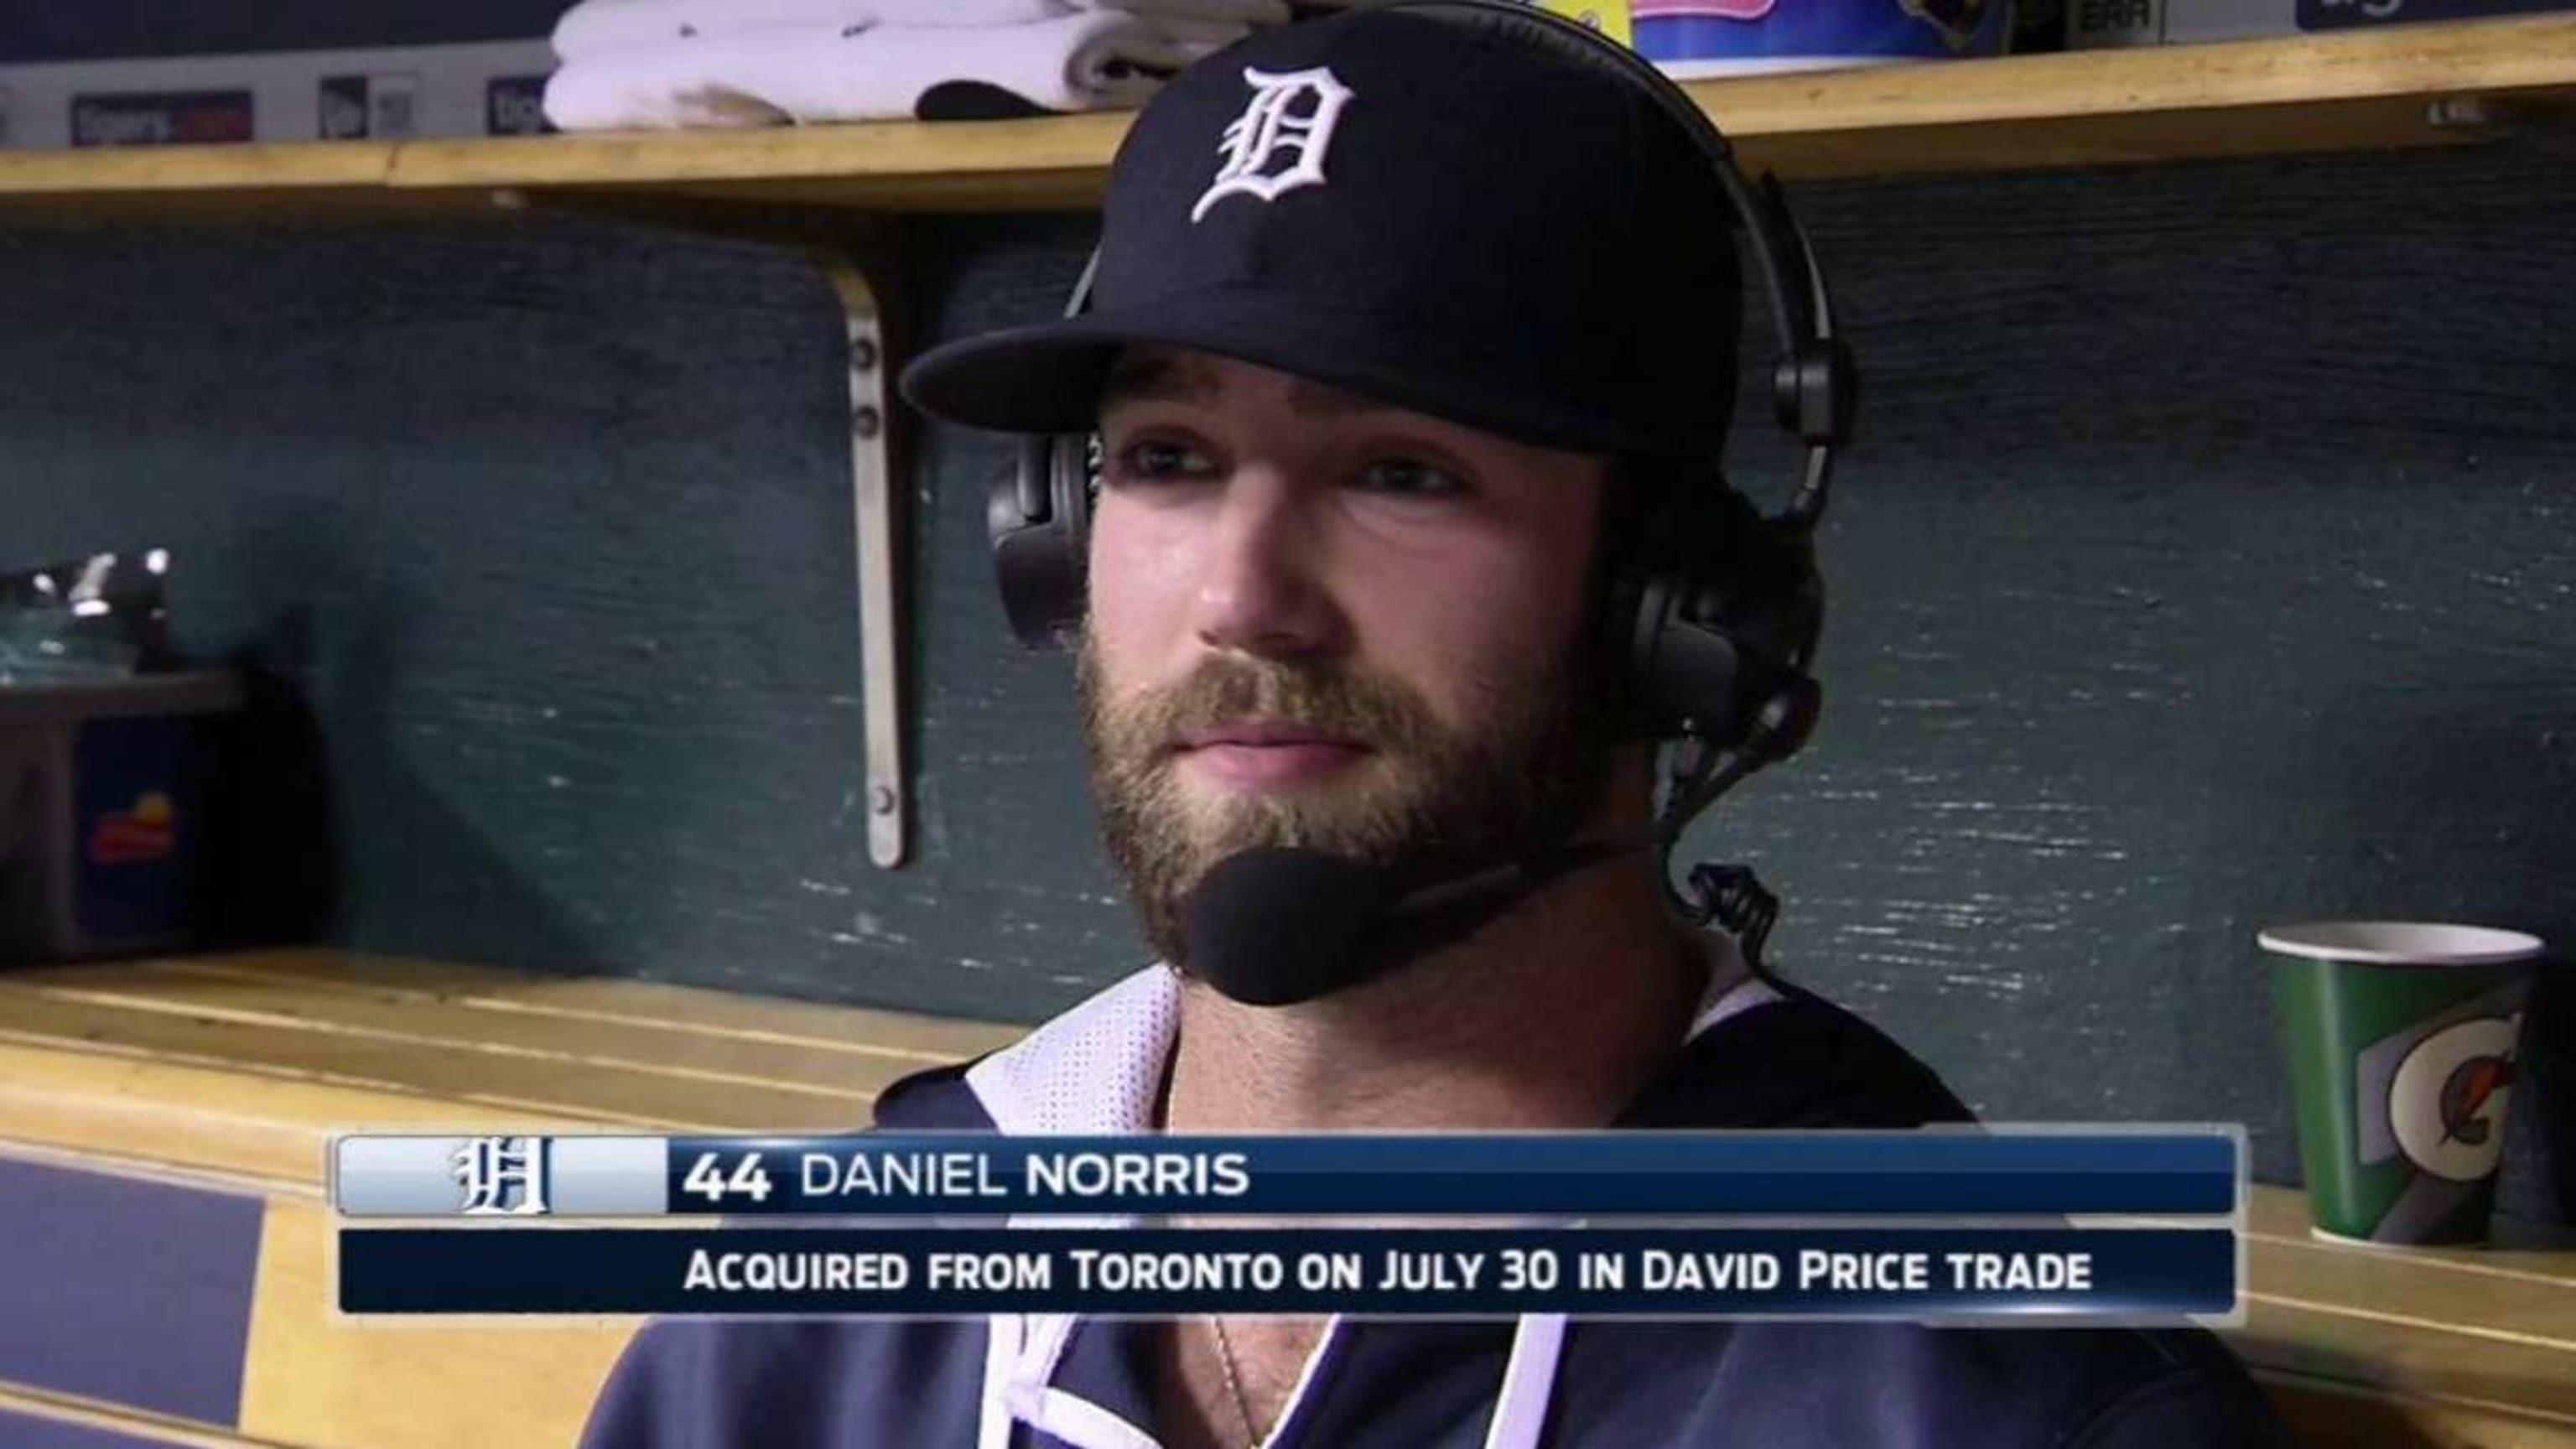 Daniel Norris spent the offseason growing a legendary beard